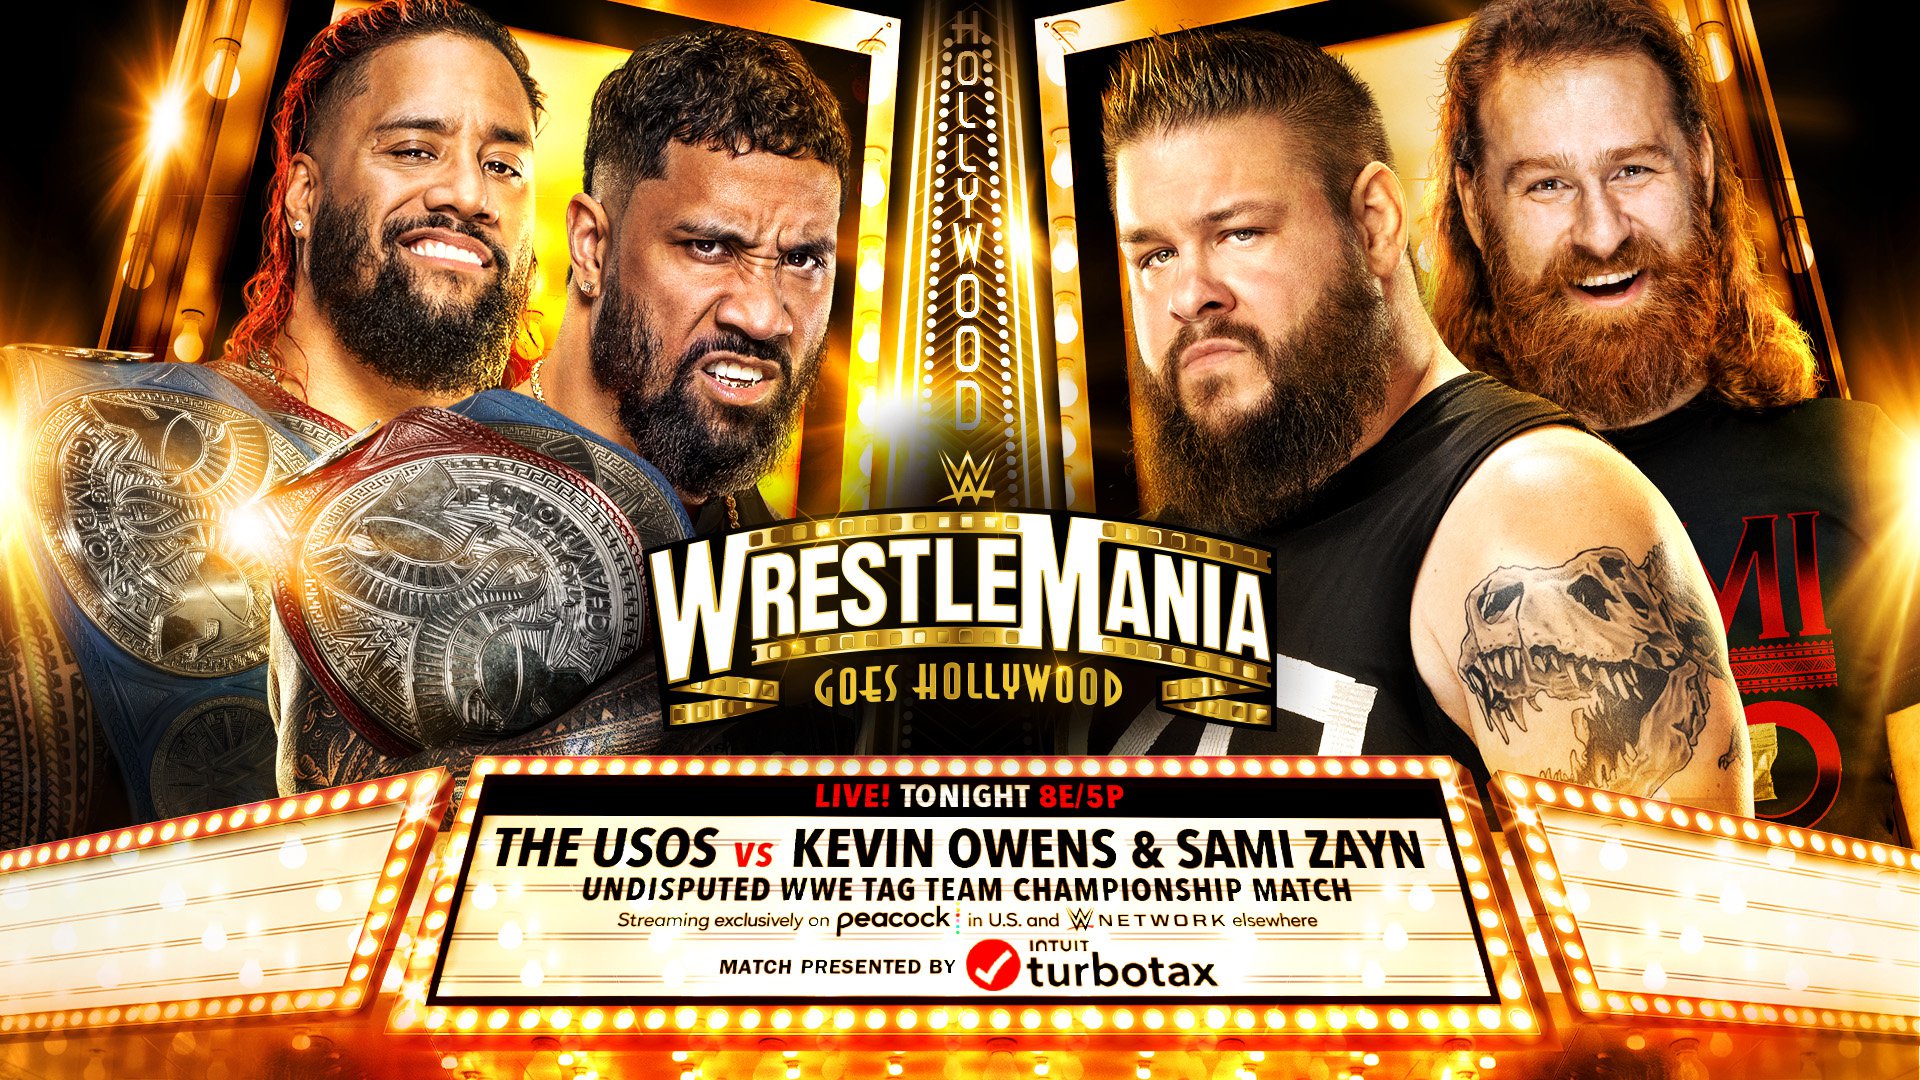 Undisputed WWE Tag Team Champions The Usos vs. Sami Zayn & Kevin Owens